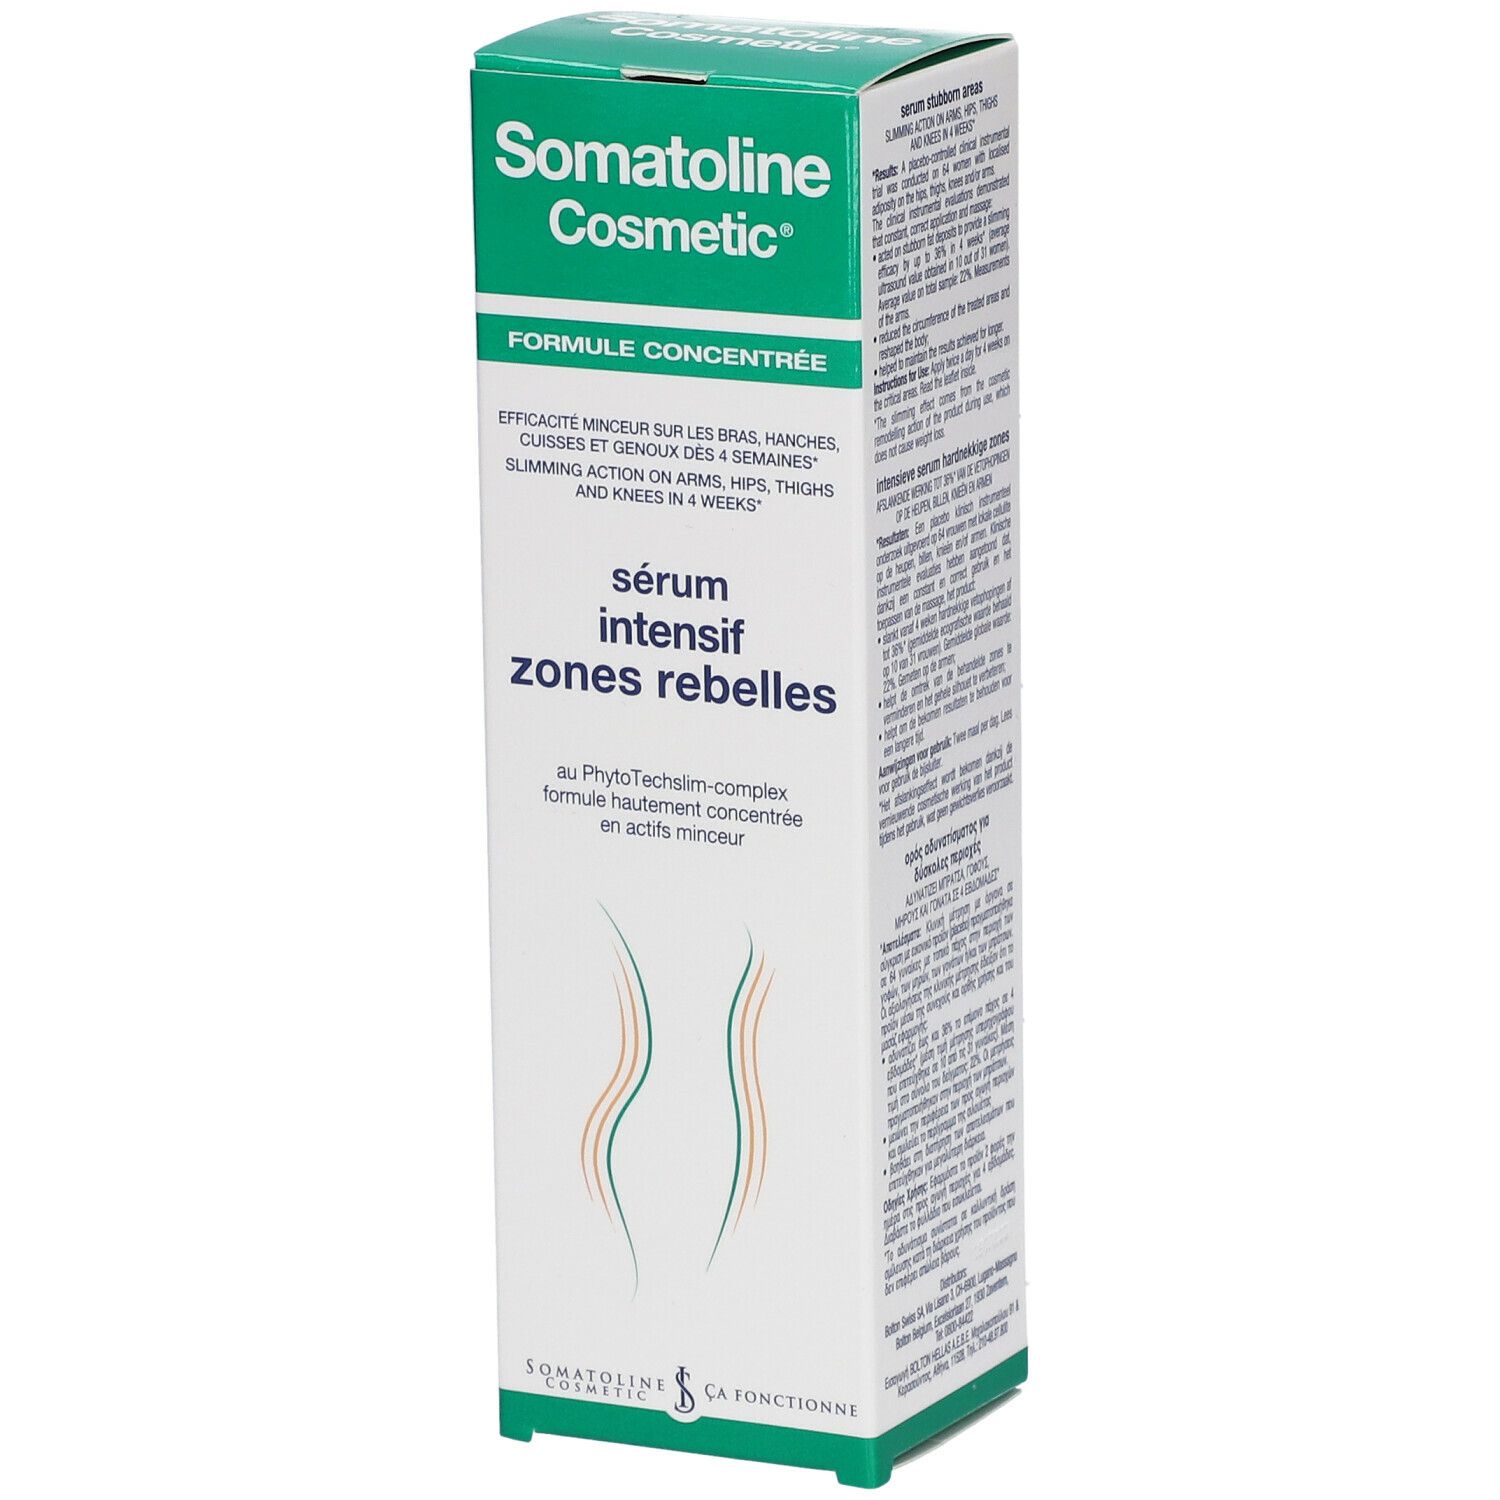 Somatoline Cosmetic® traitement intensif zones rebelles